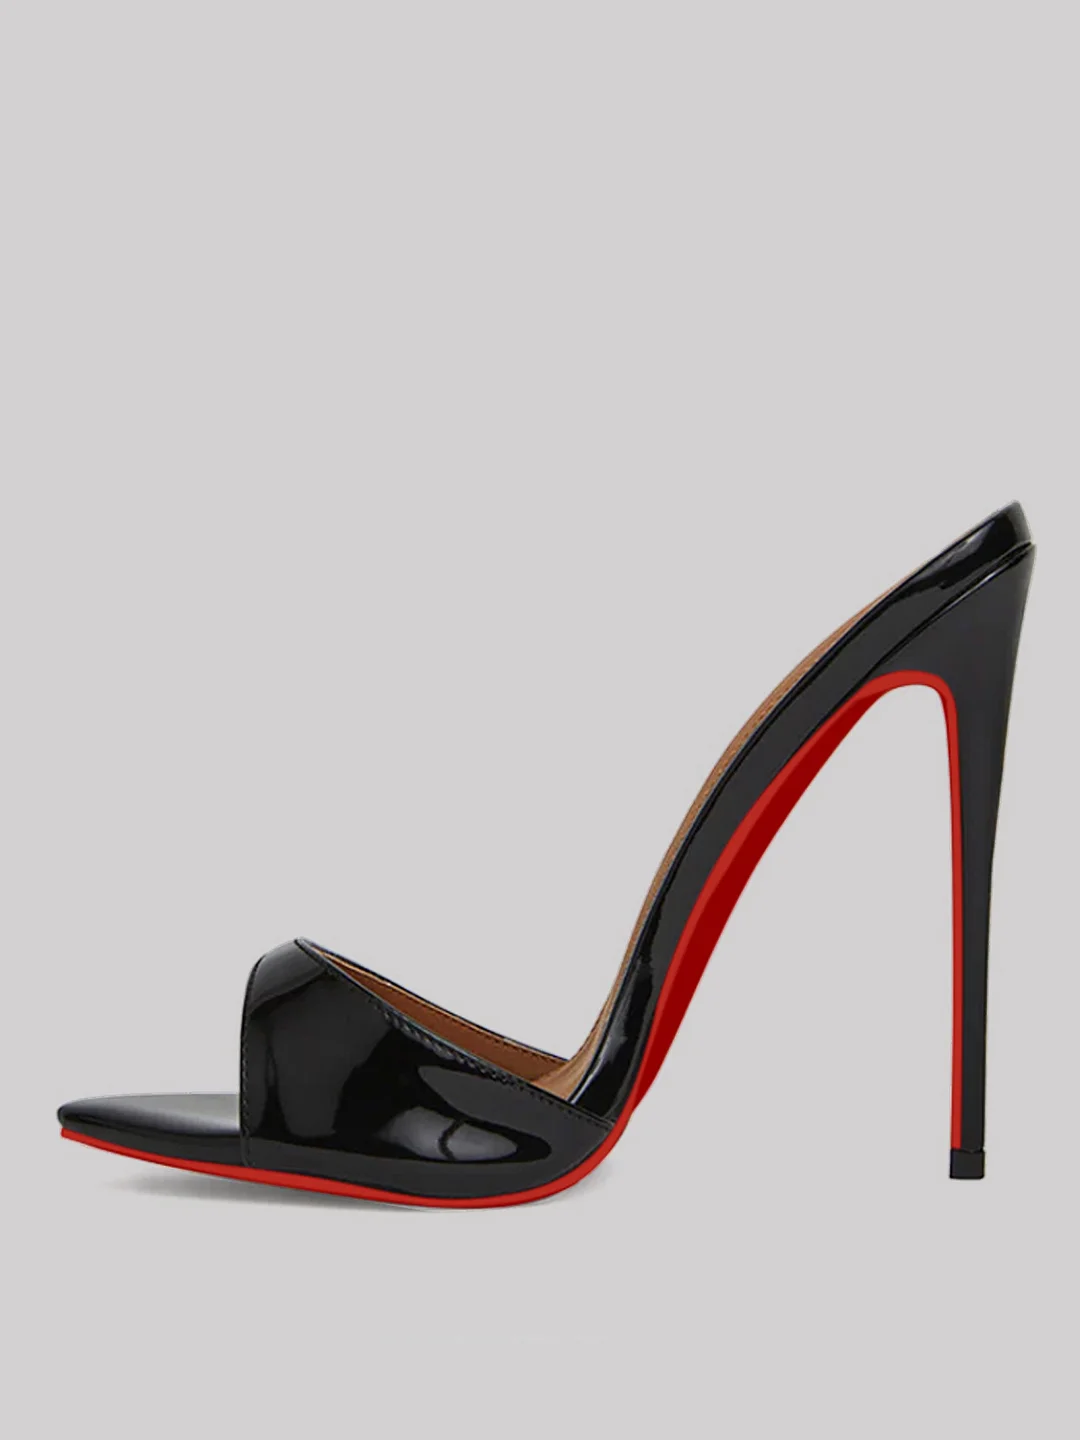 100mm Women's Open Toe Sandals Stiletto Red Bottom High Heels Vegan Mules Patent Shoes